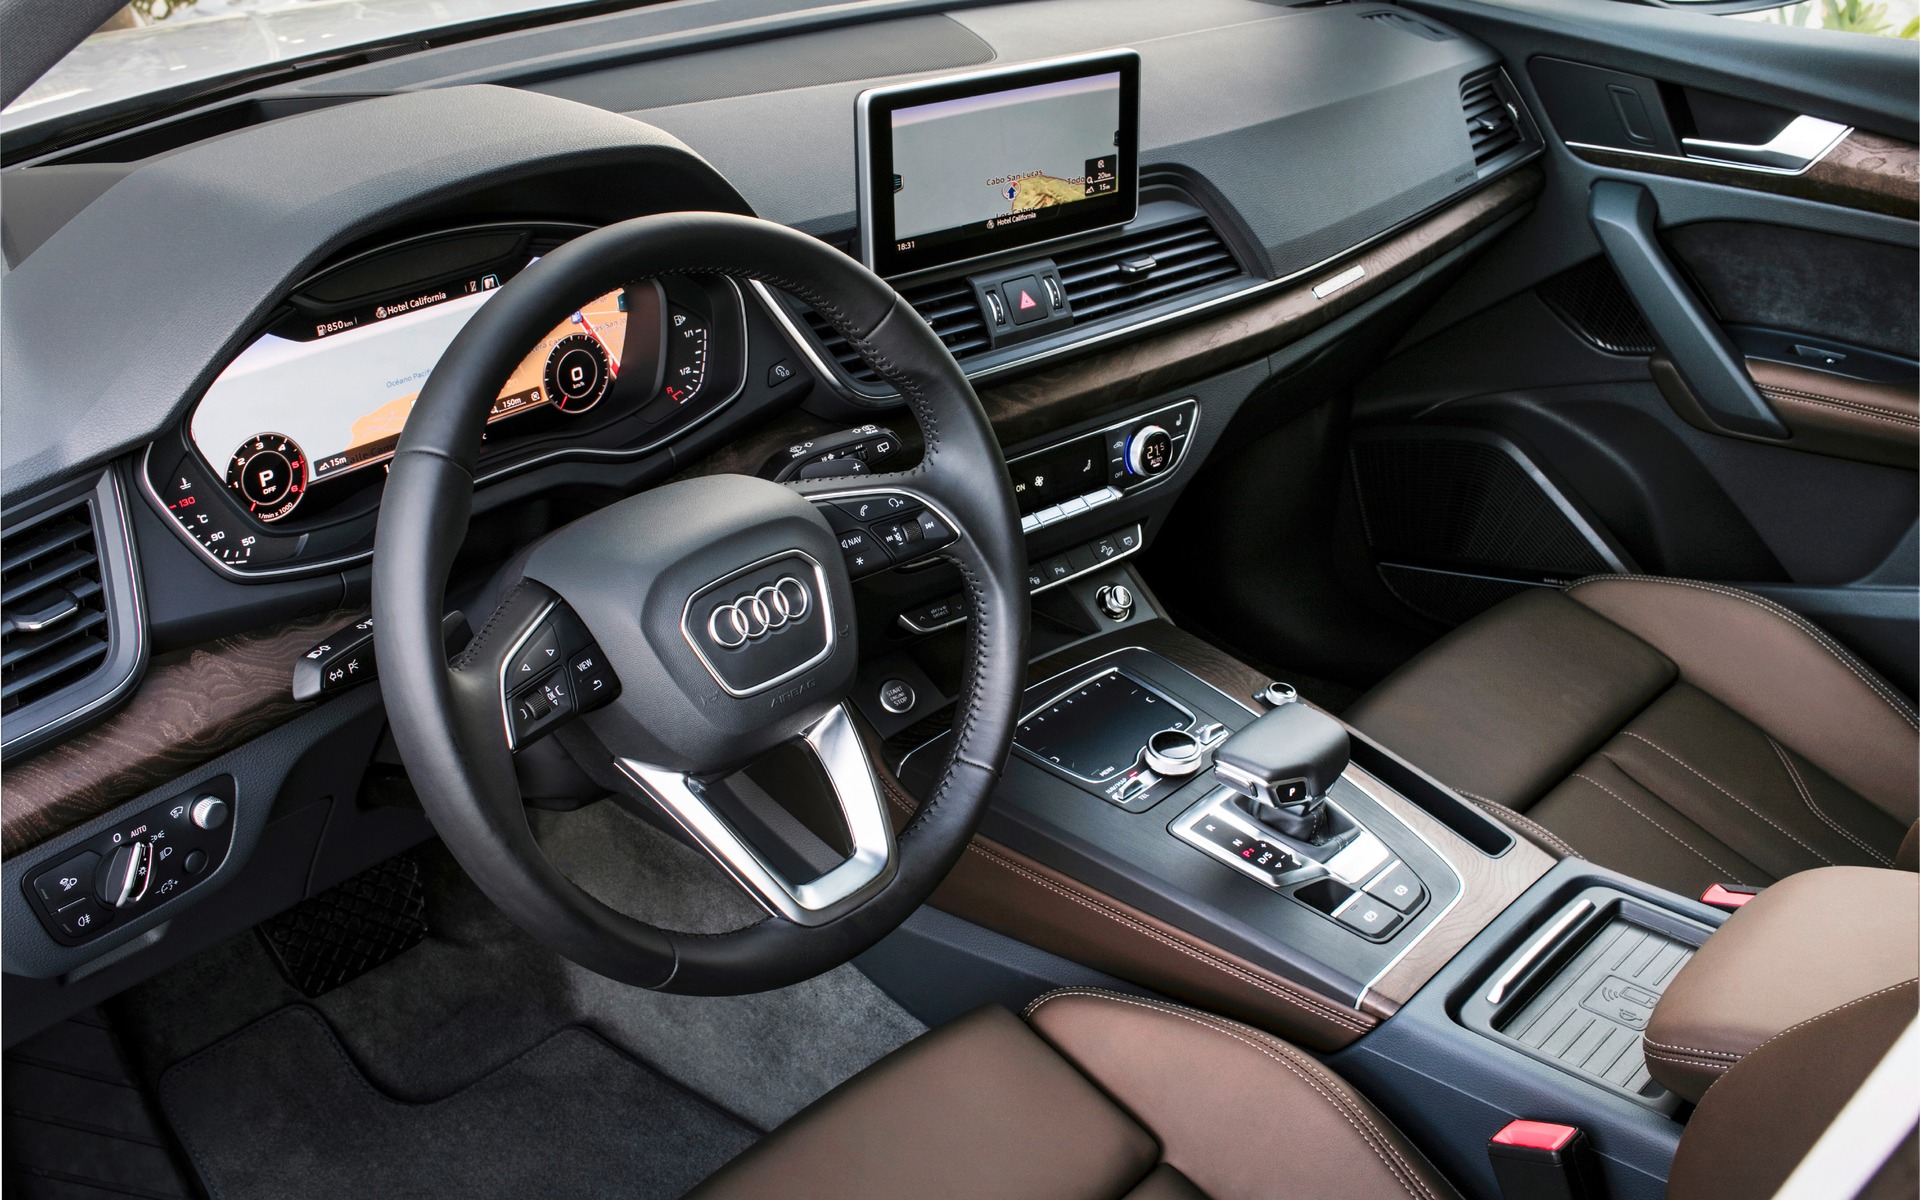 2019 Audi Q5 Trim Levels